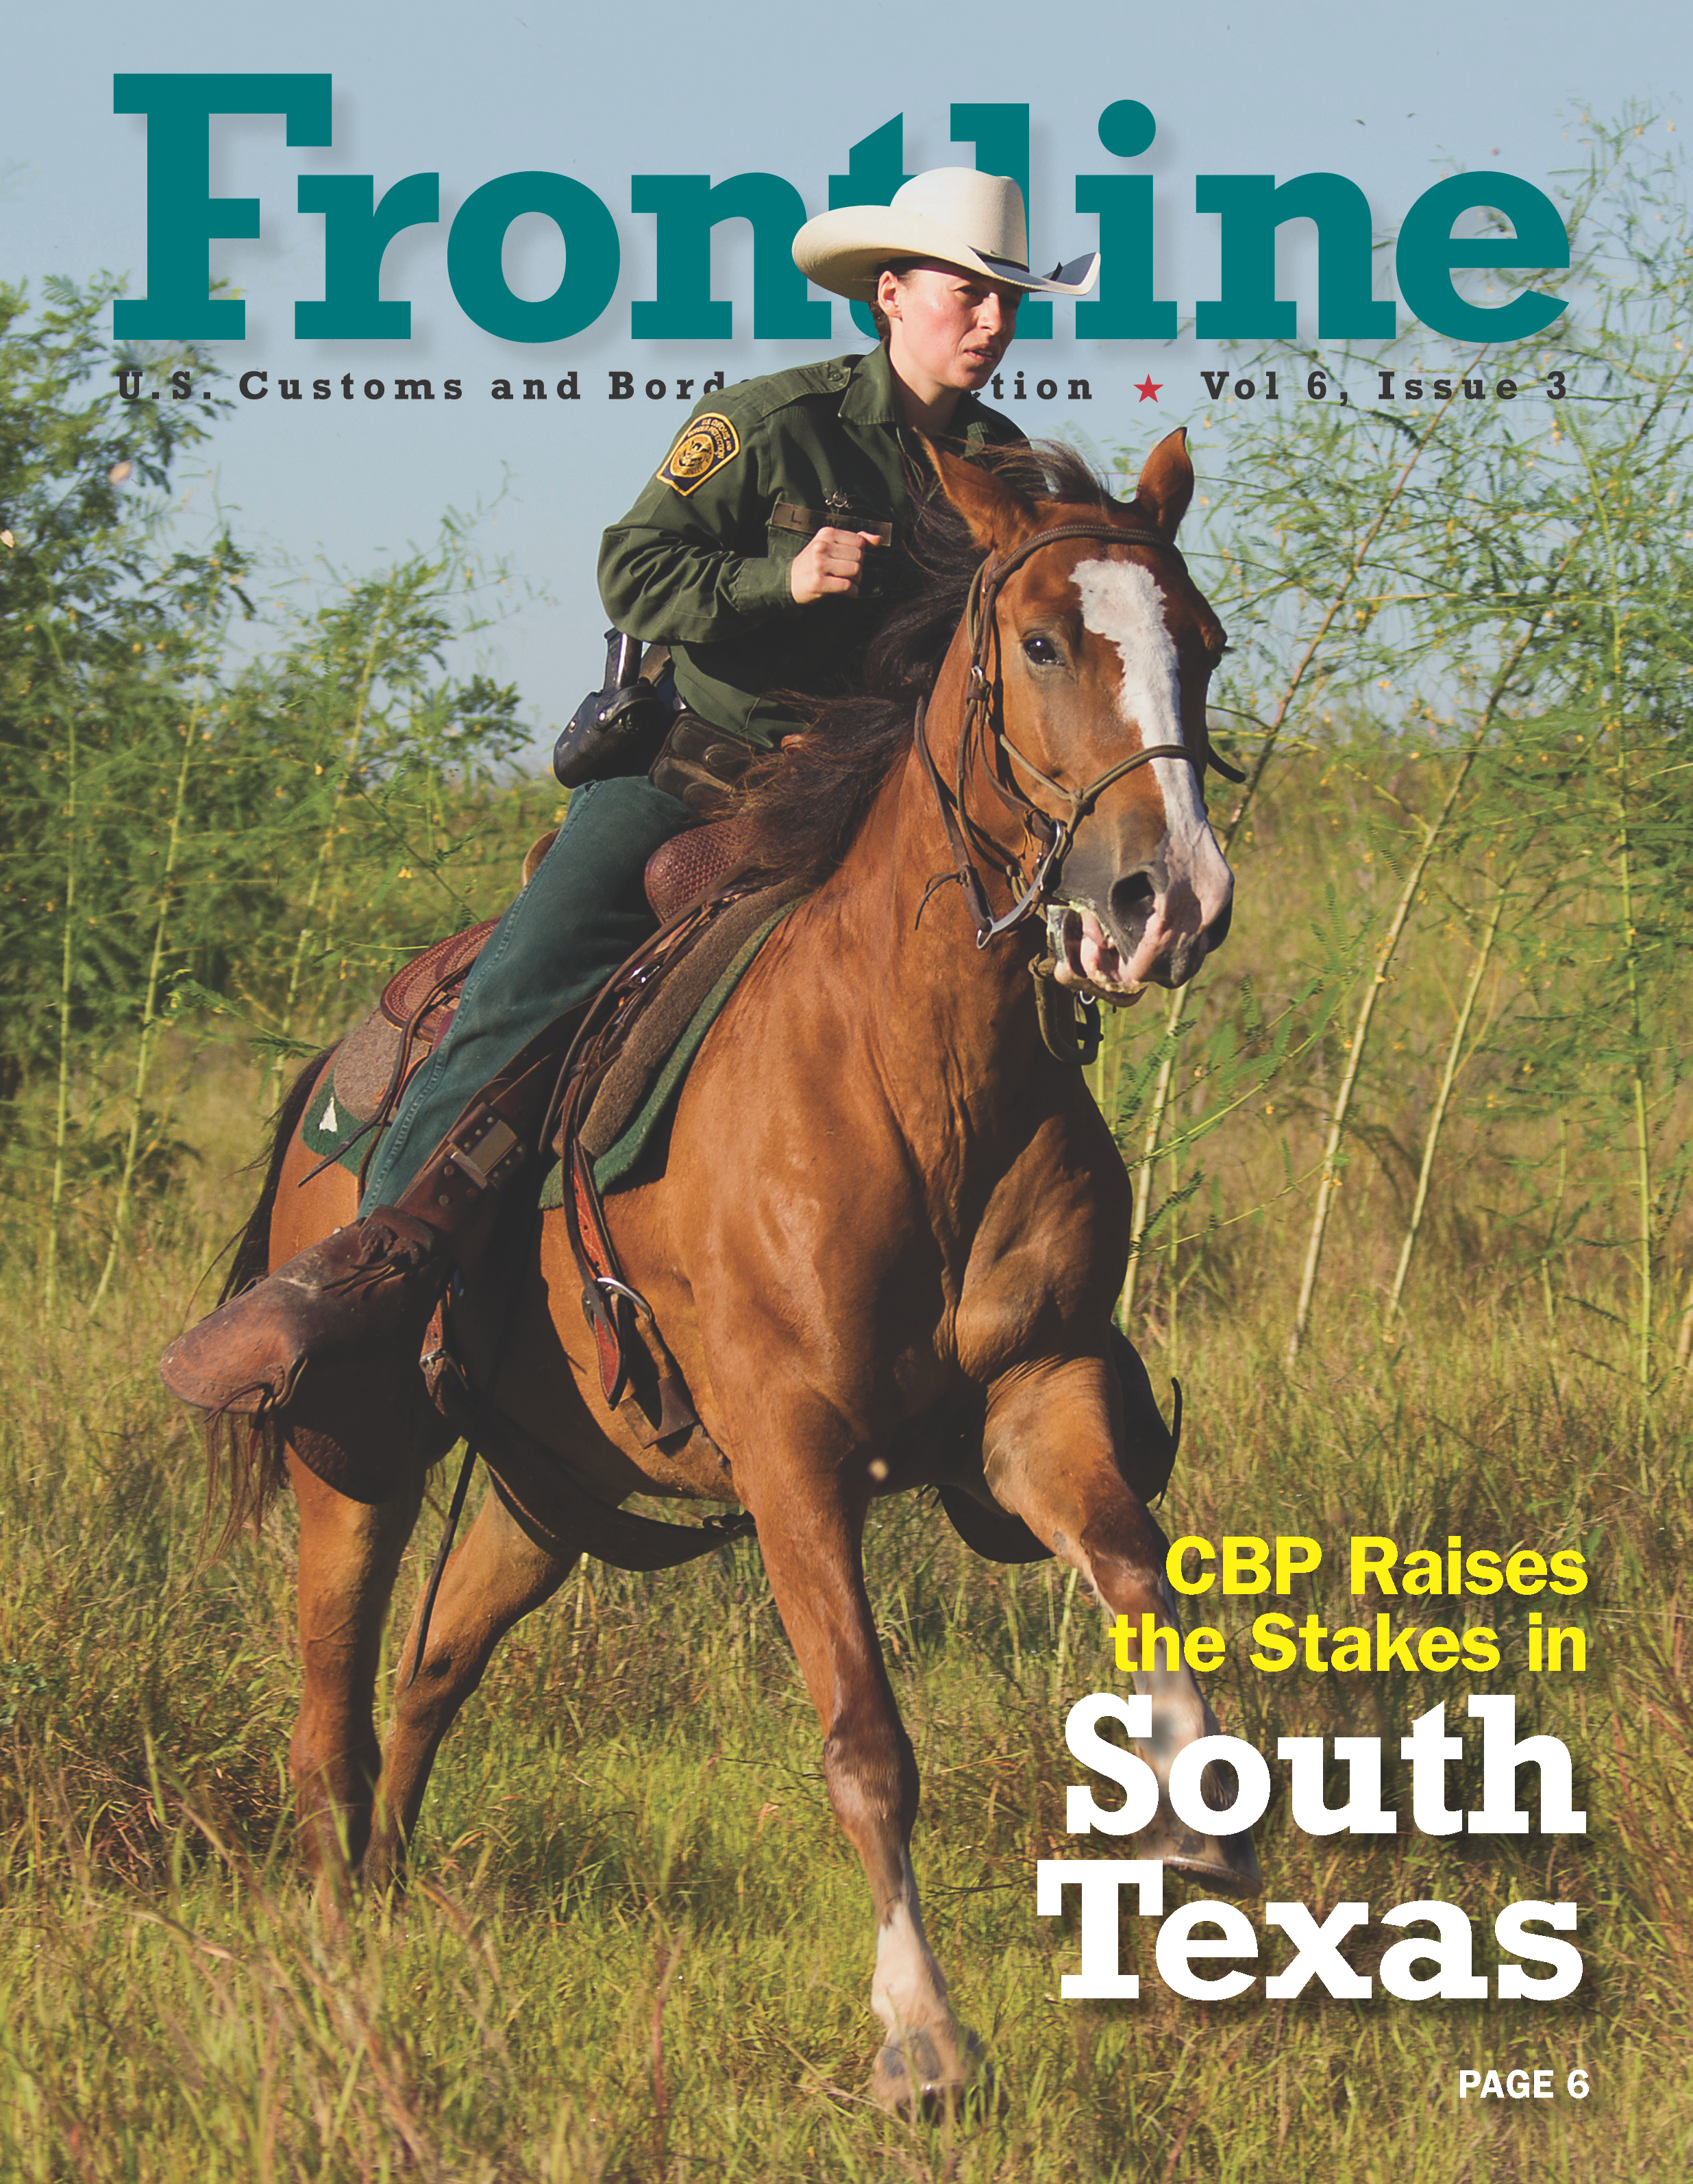 Frontline Magazine, Vol. 6, Issue 3